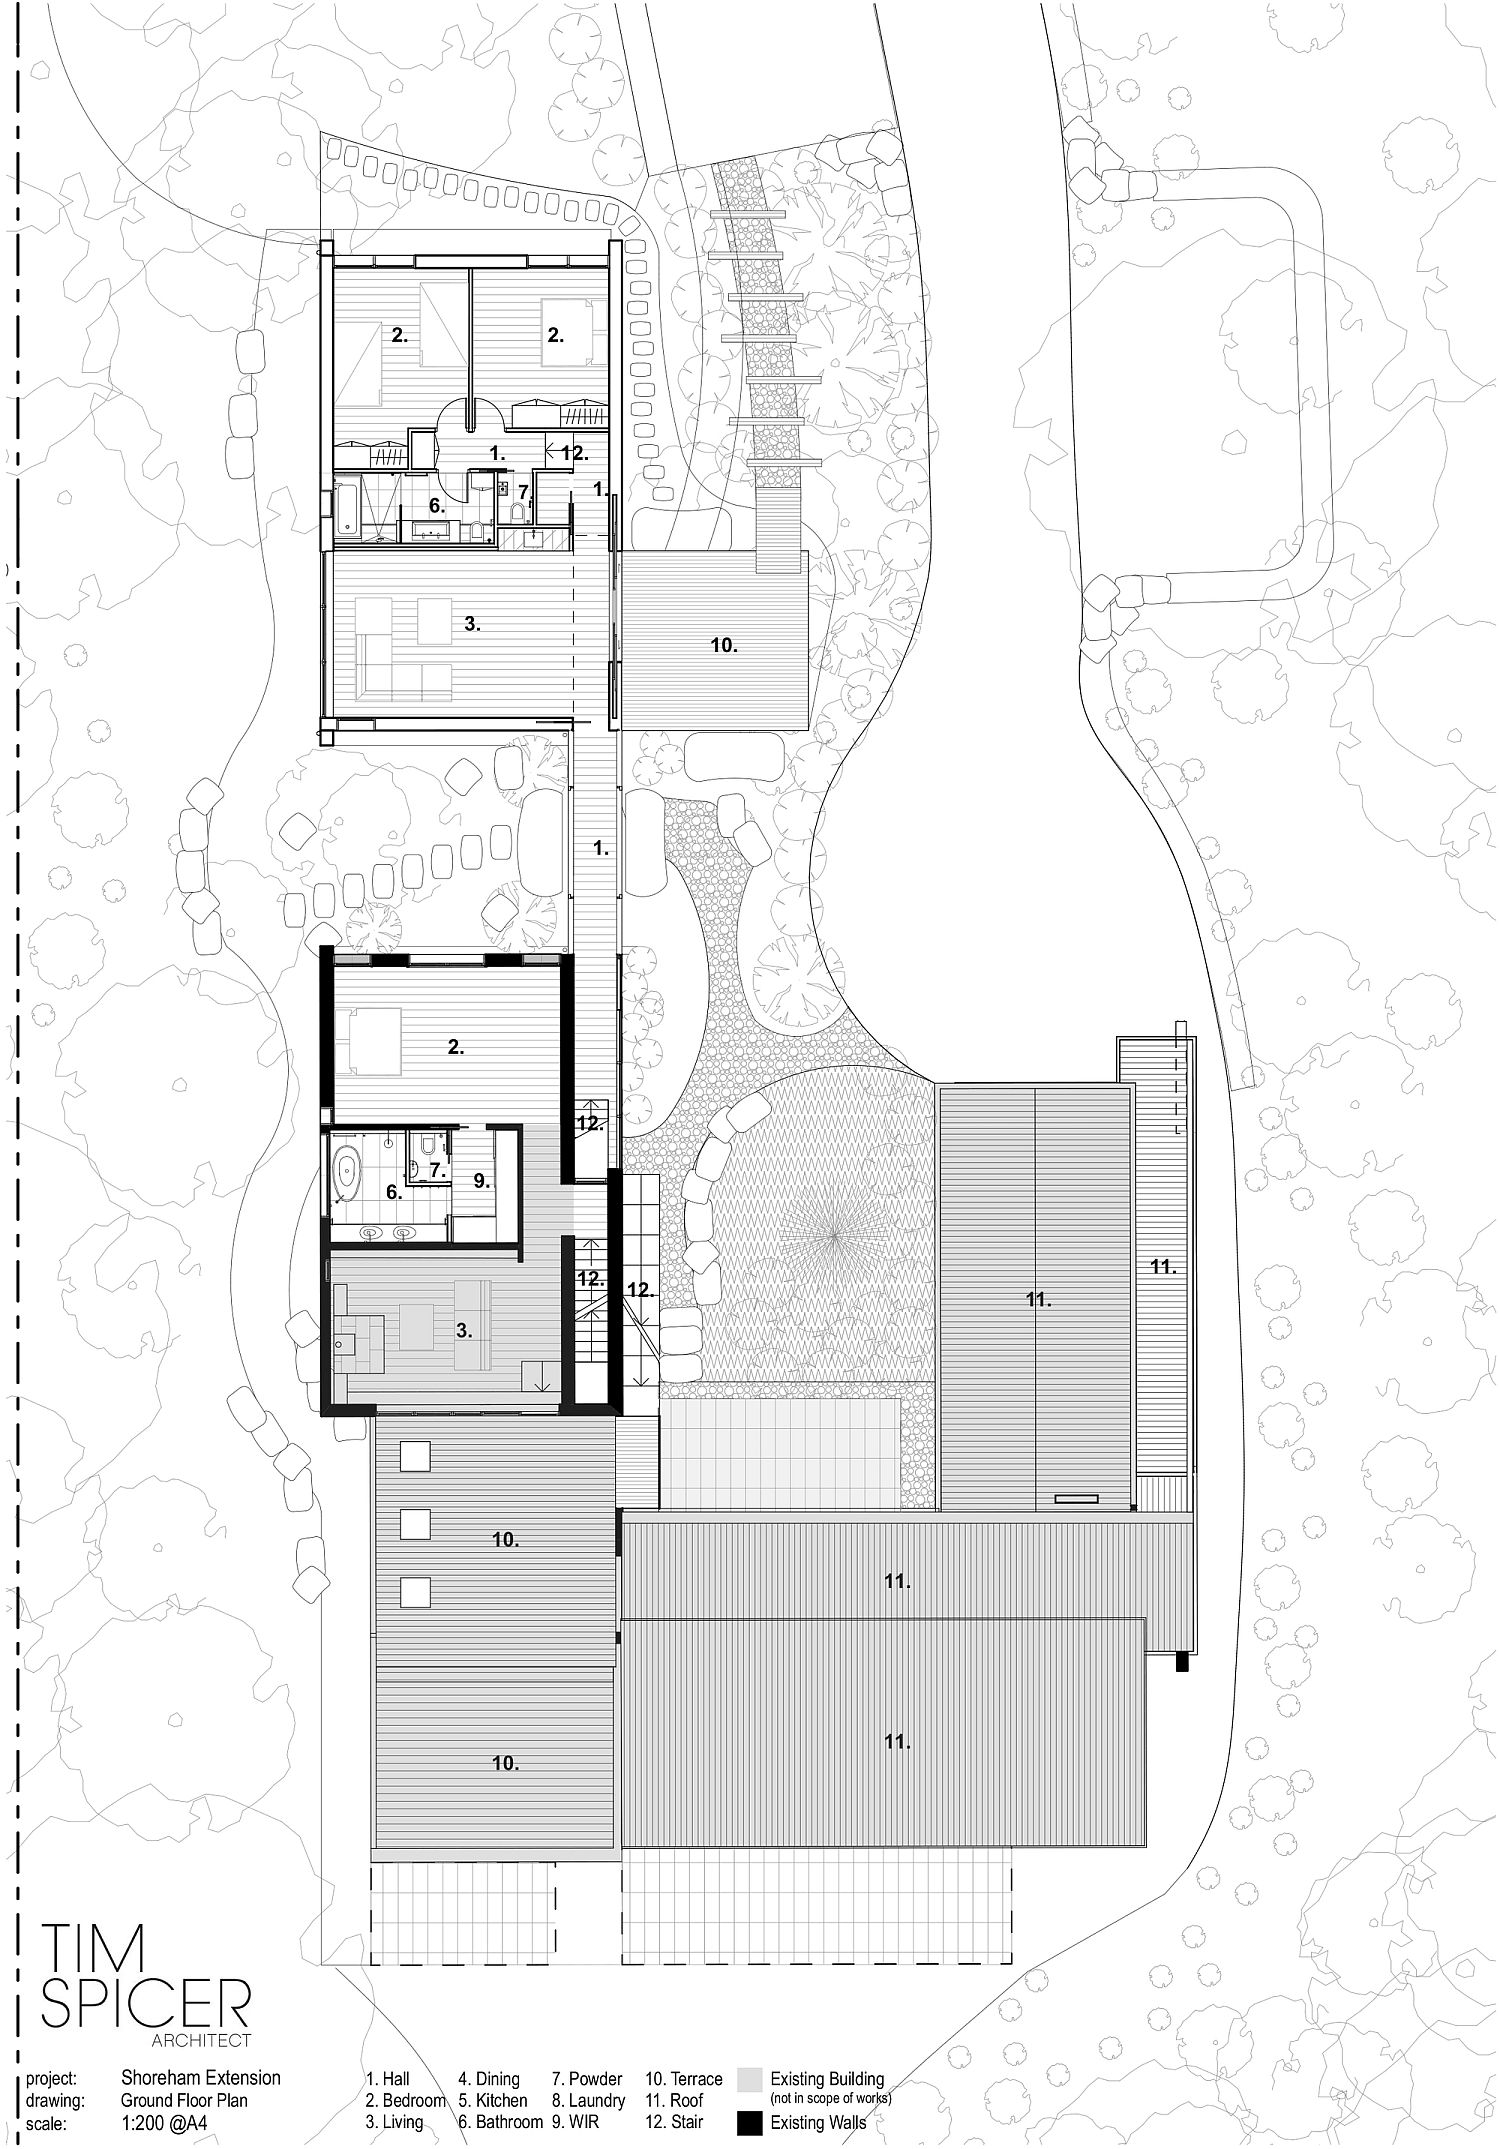 Upper level floor plan filled with bedrooms